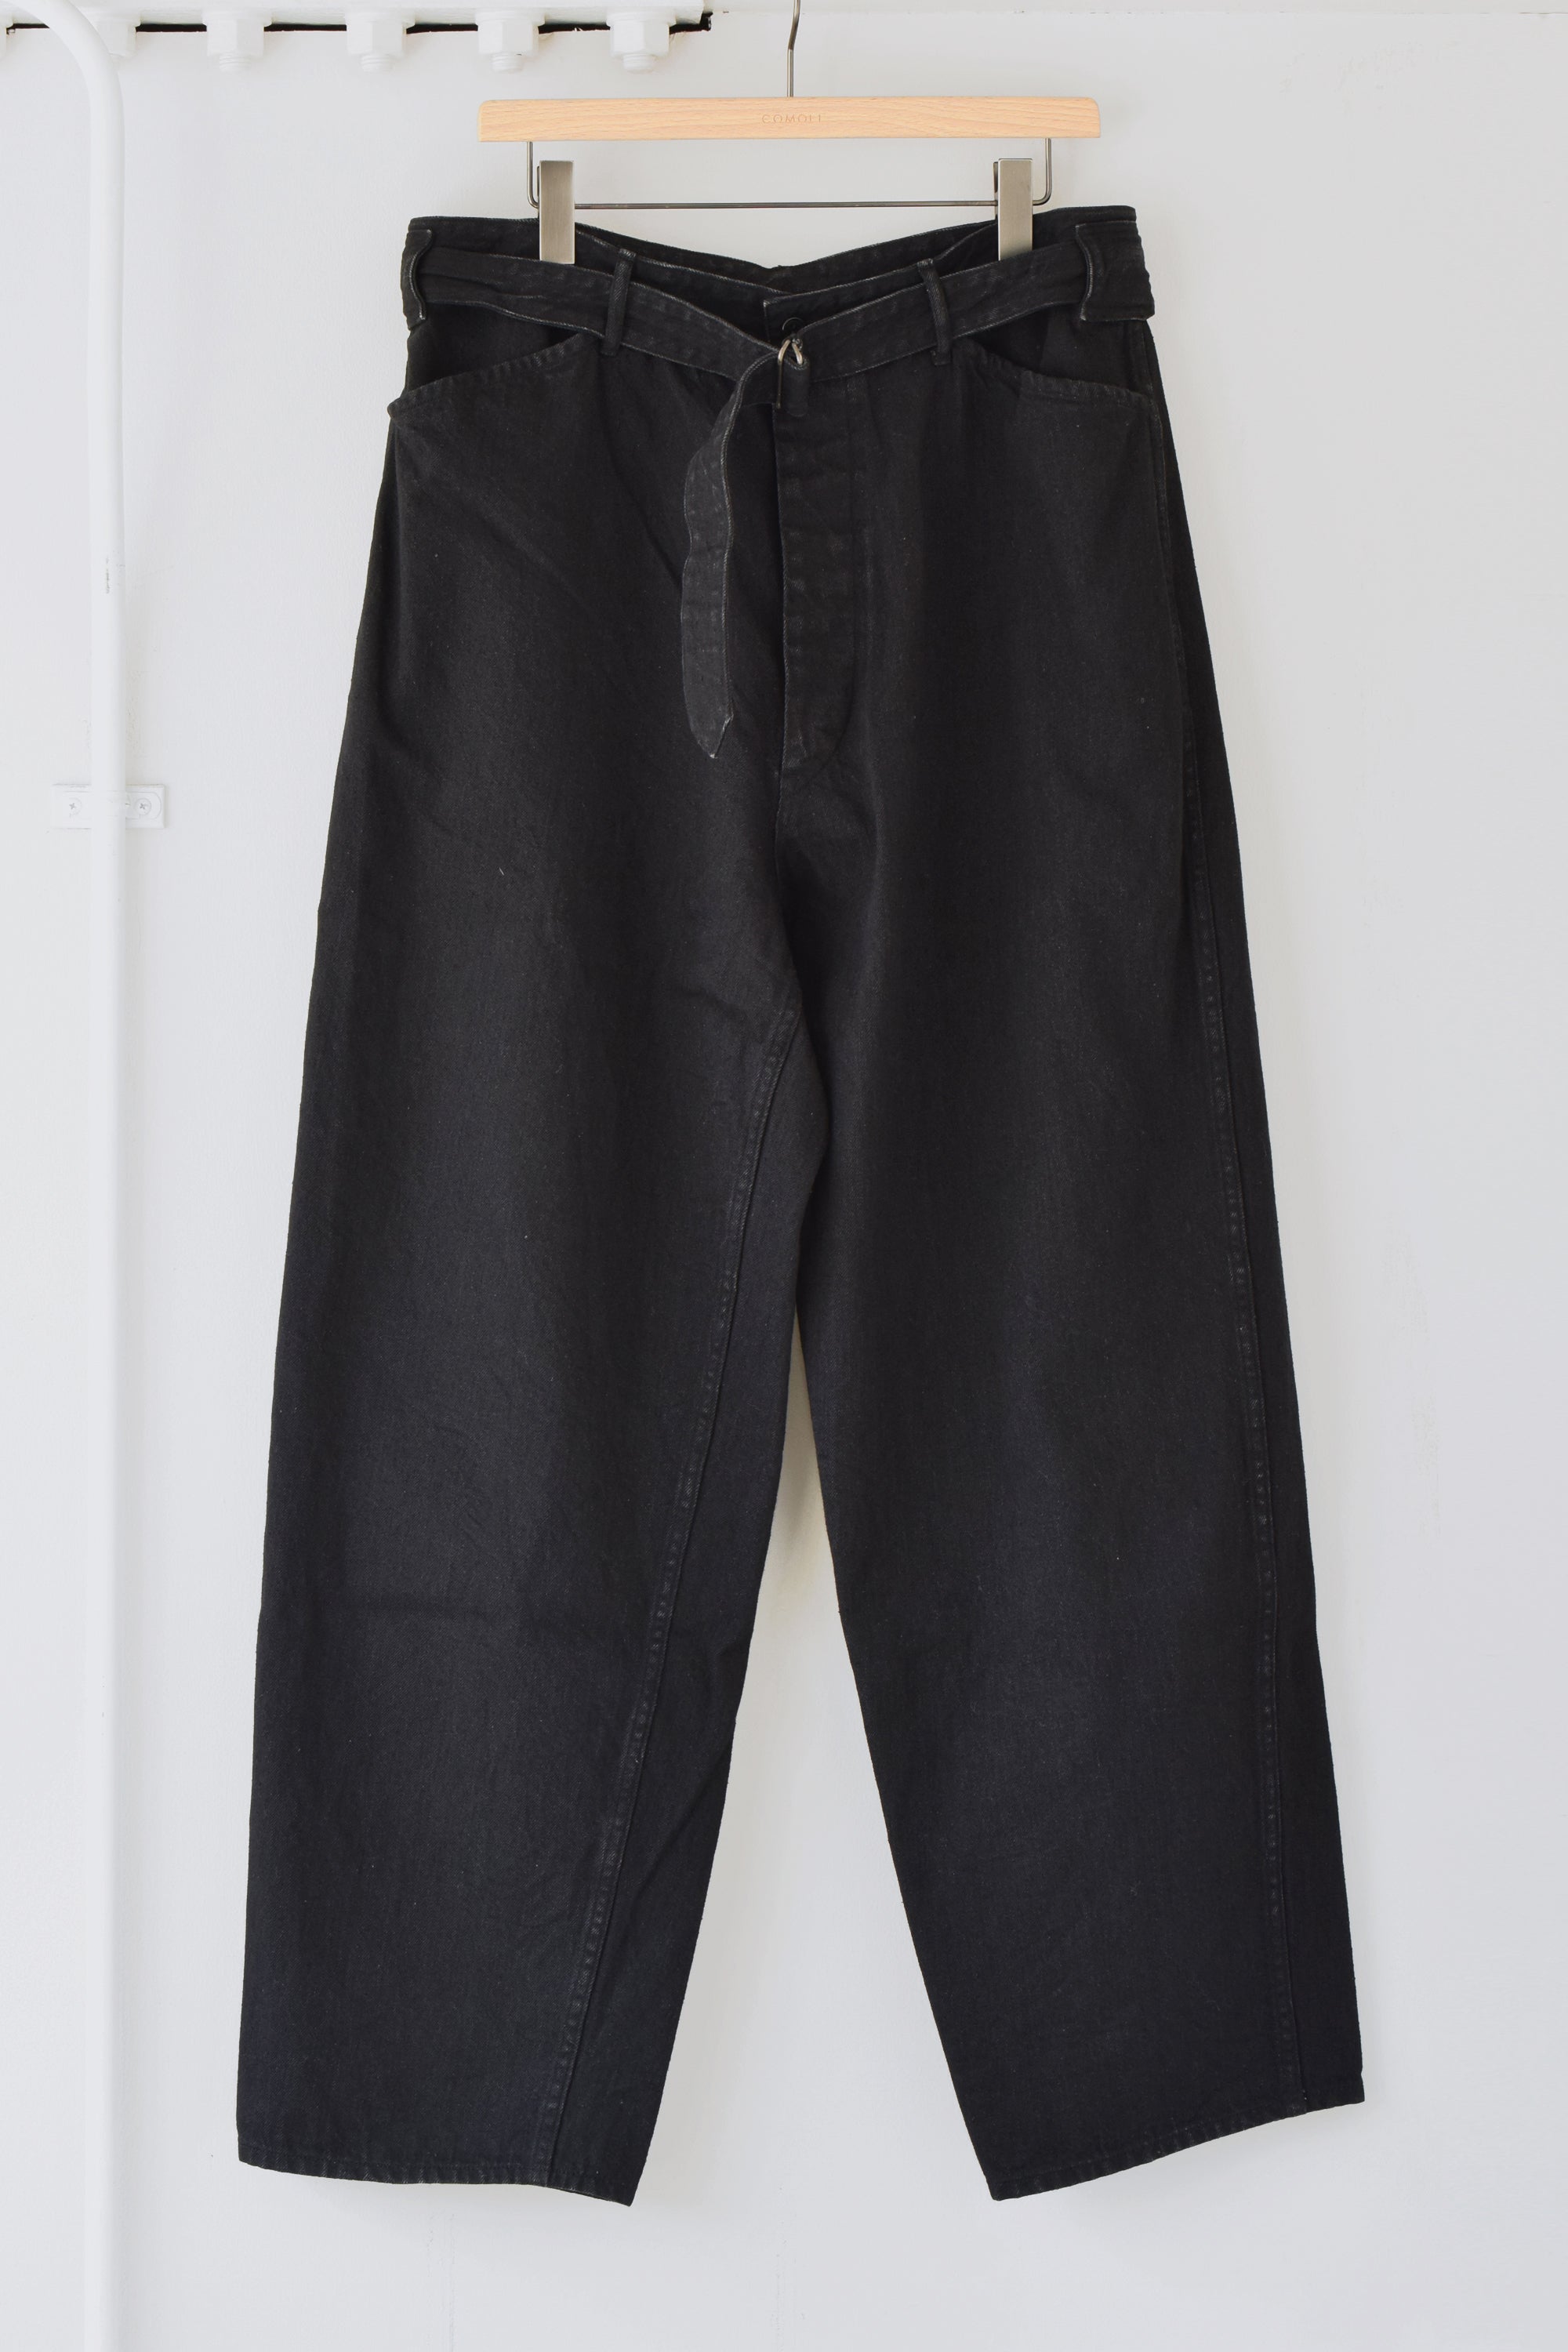 24SS COMOLI ベルテッドデニムパンツ ブラック サイズ2 - パンツ